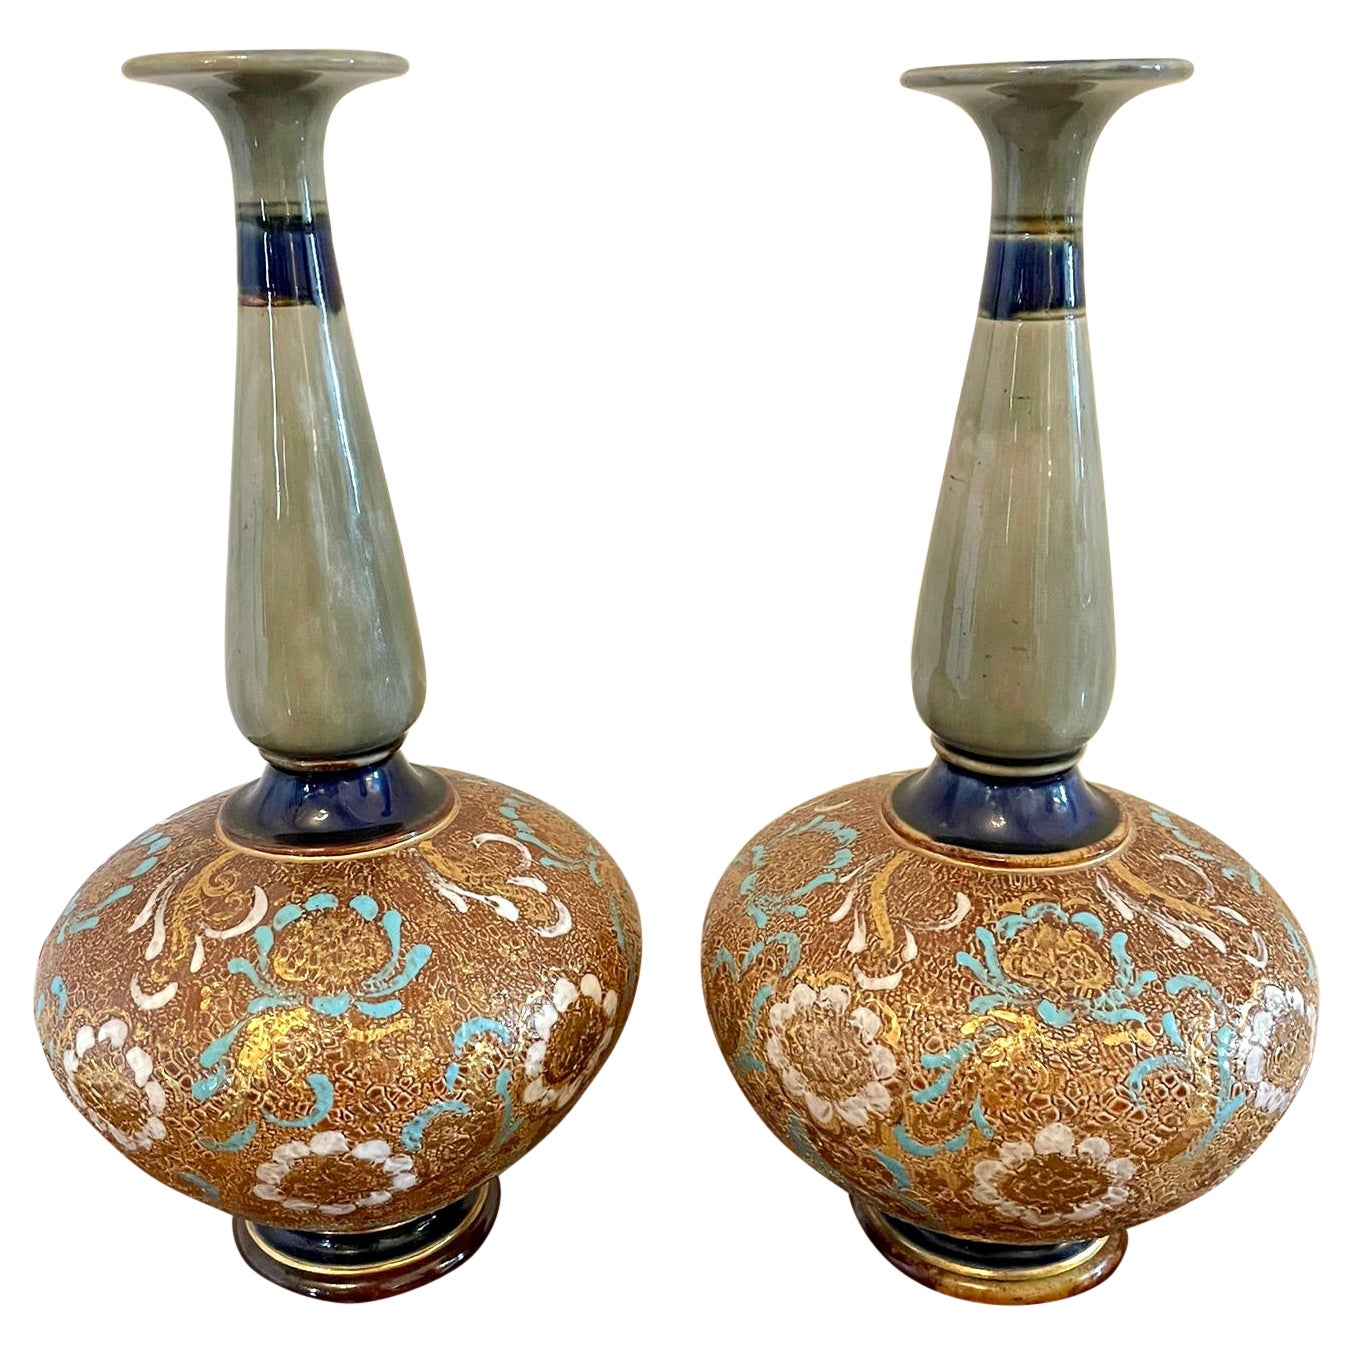 Pair of Antique Royal Doulton Vases